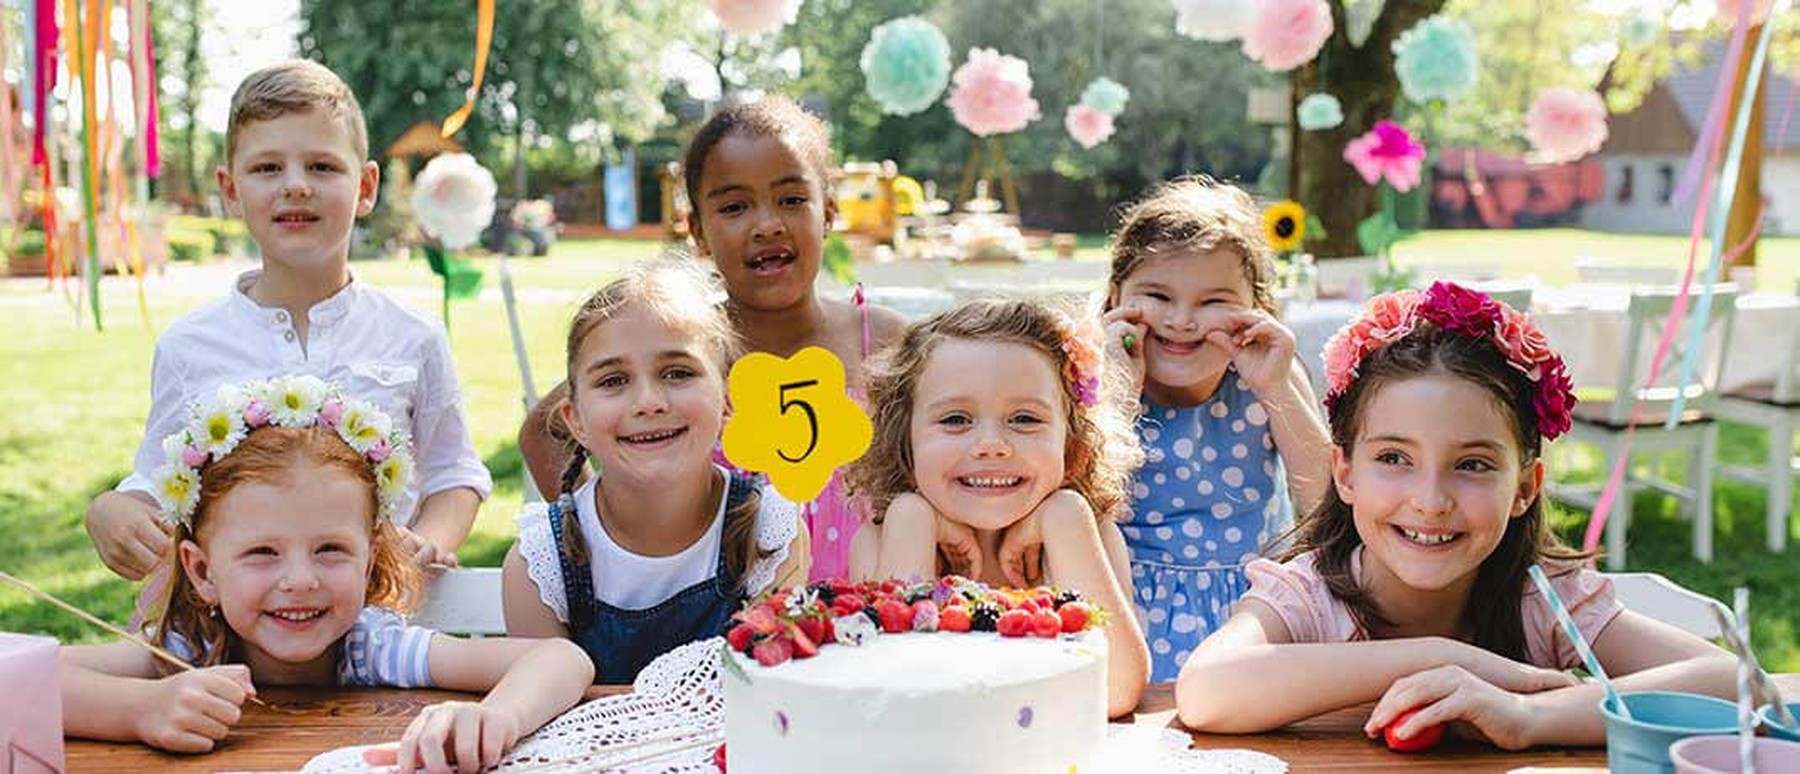 Kinderfeestje op komst? 5 tips voor betaalbare kinderfeestjes